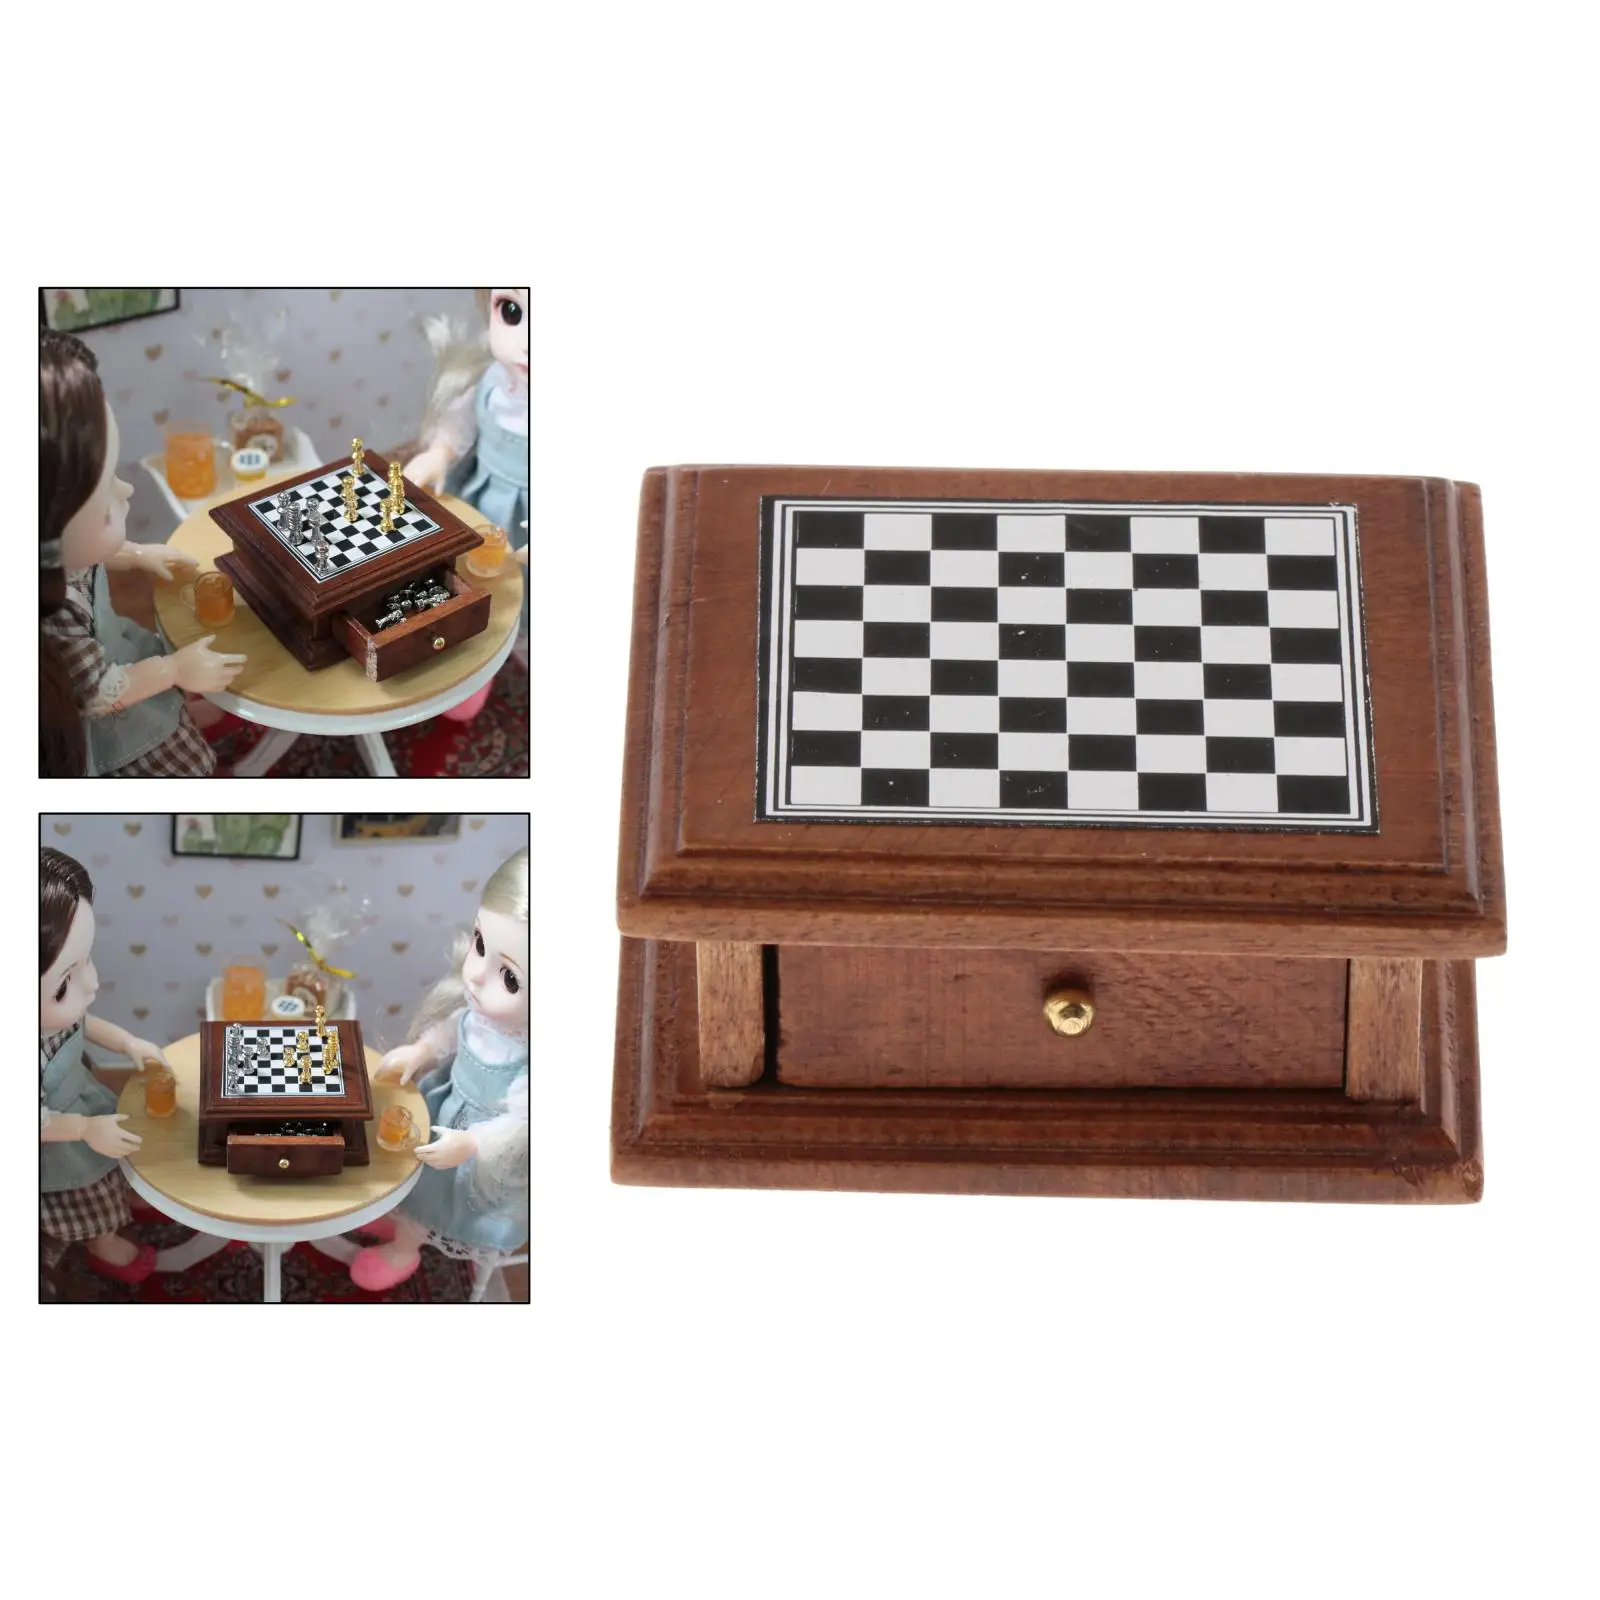 1:12 Dollhouse Miniature Chess Set Board Toys Chess Game Miniature Chess Toy 